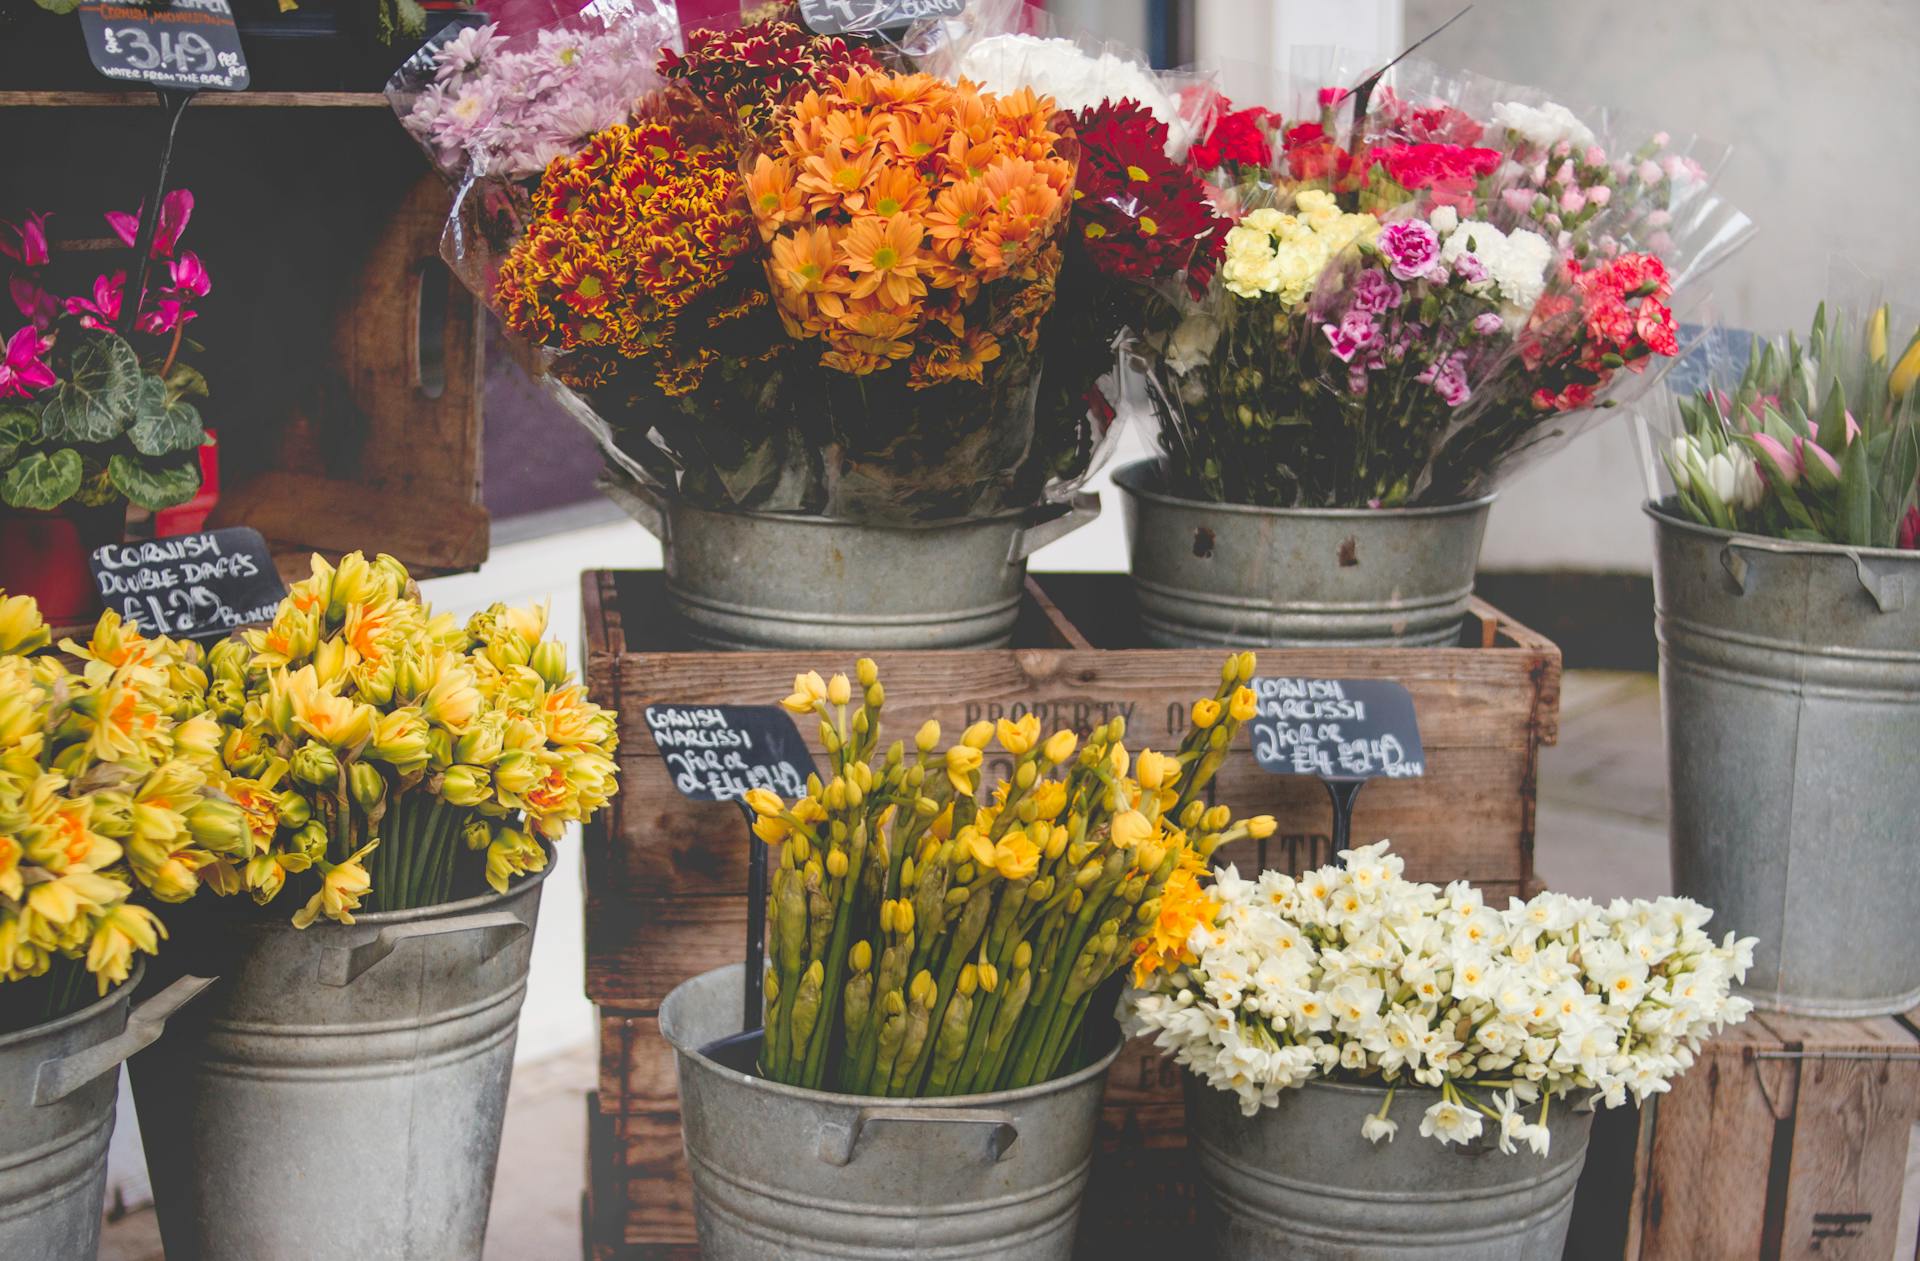 Silver buckets of flowers | Source: Pexels